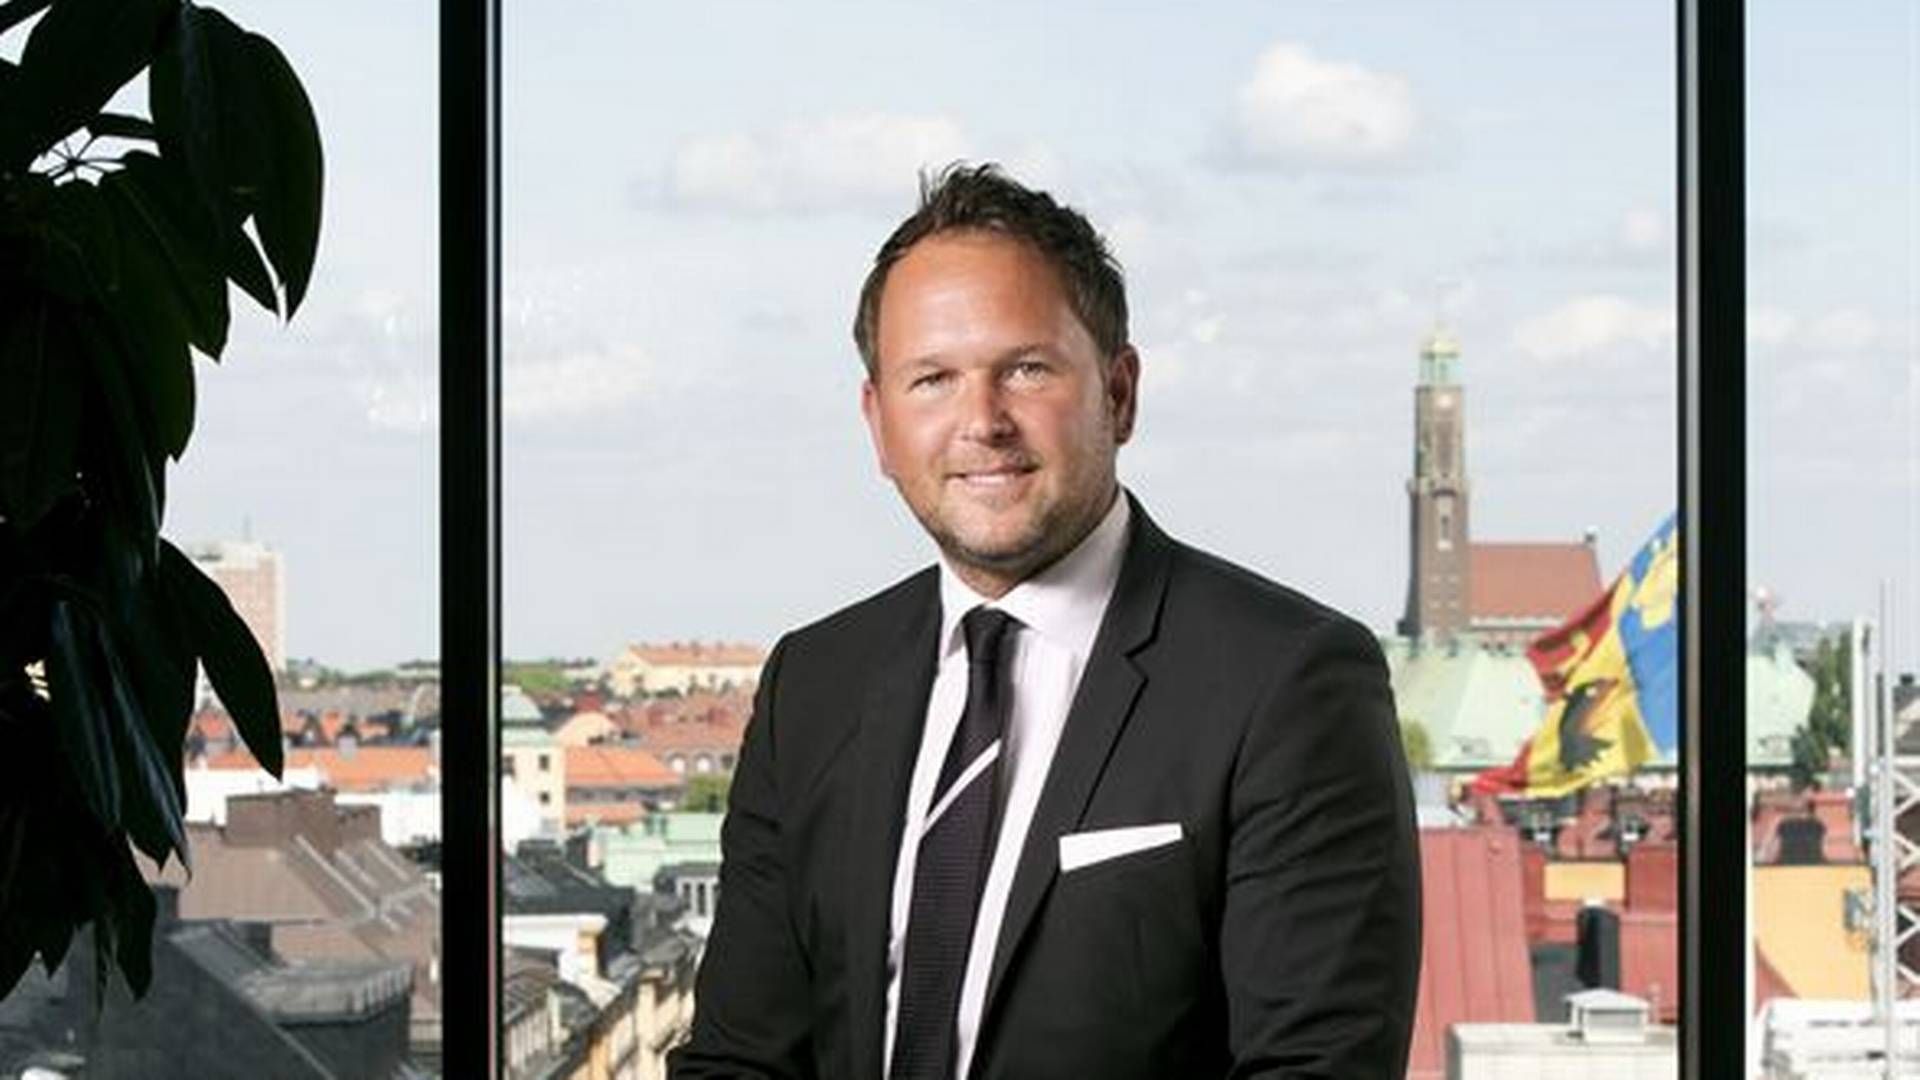 Jonas Ingerdal Predikaka is one of five former Carnegie employees who is setting up private banking at ABG. | Photo: Rickard Kilström / Carnegie / Pr